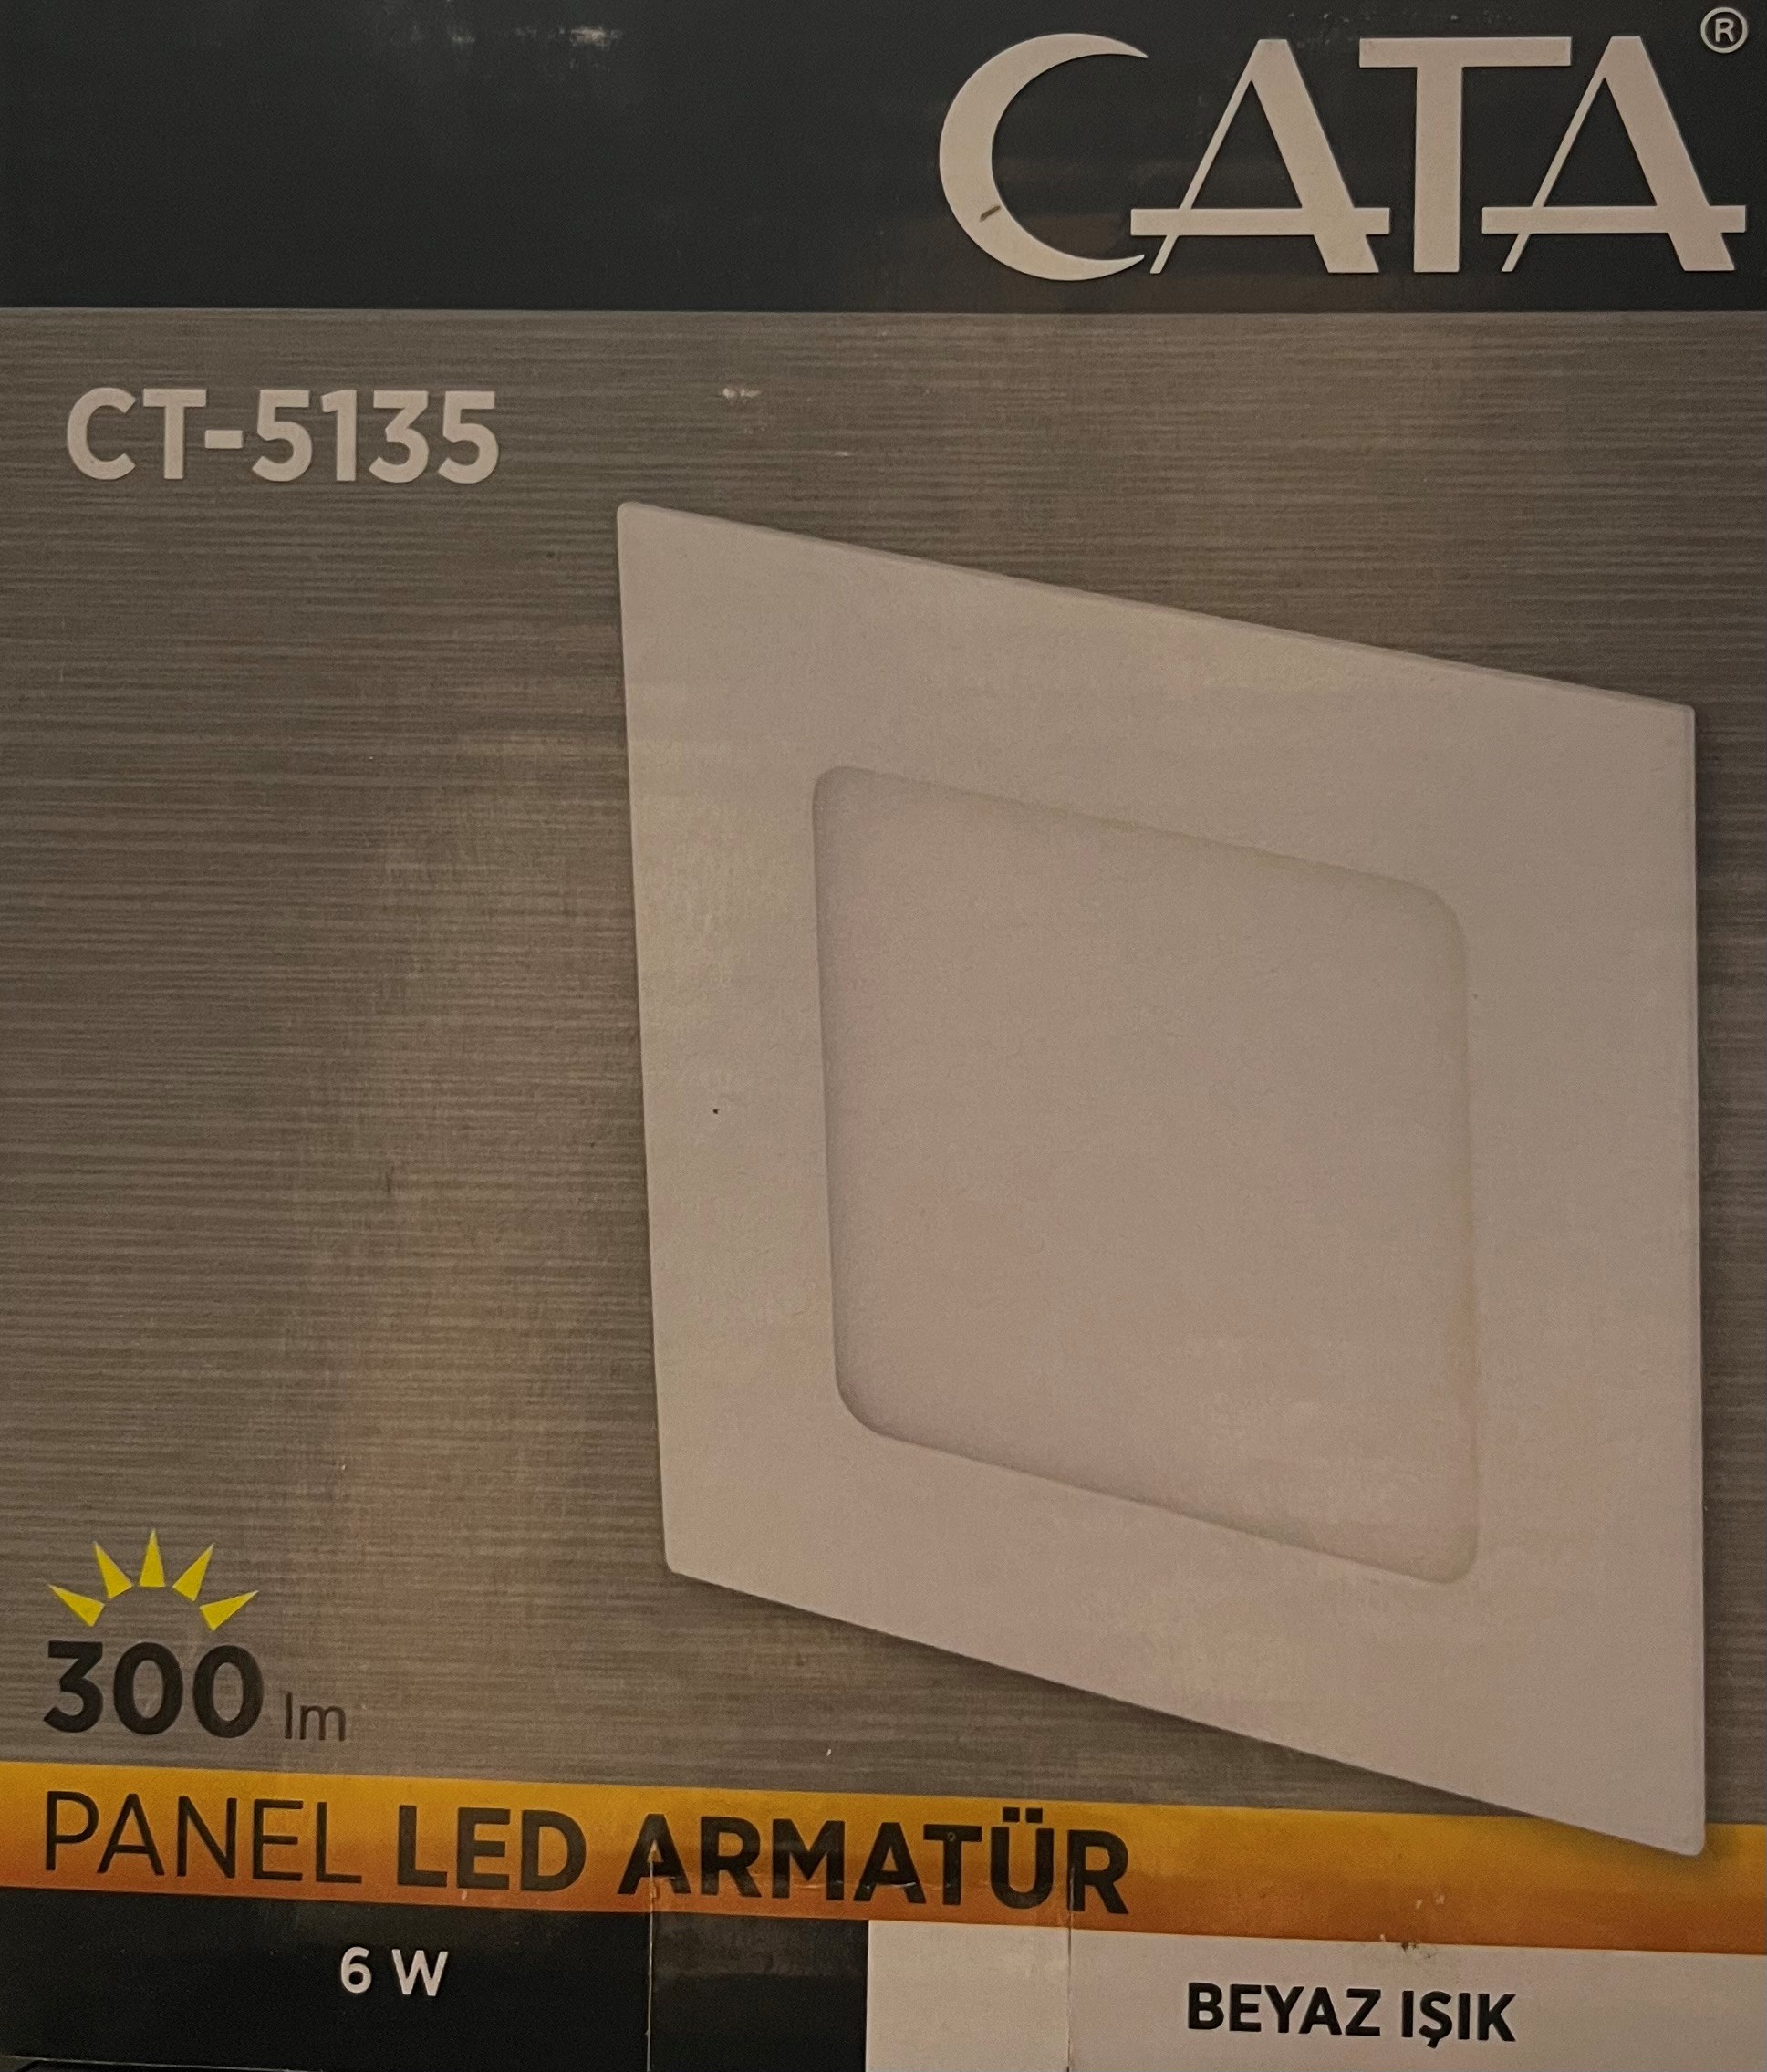 Cata Ct-5135 Panel Led Armatür 6W